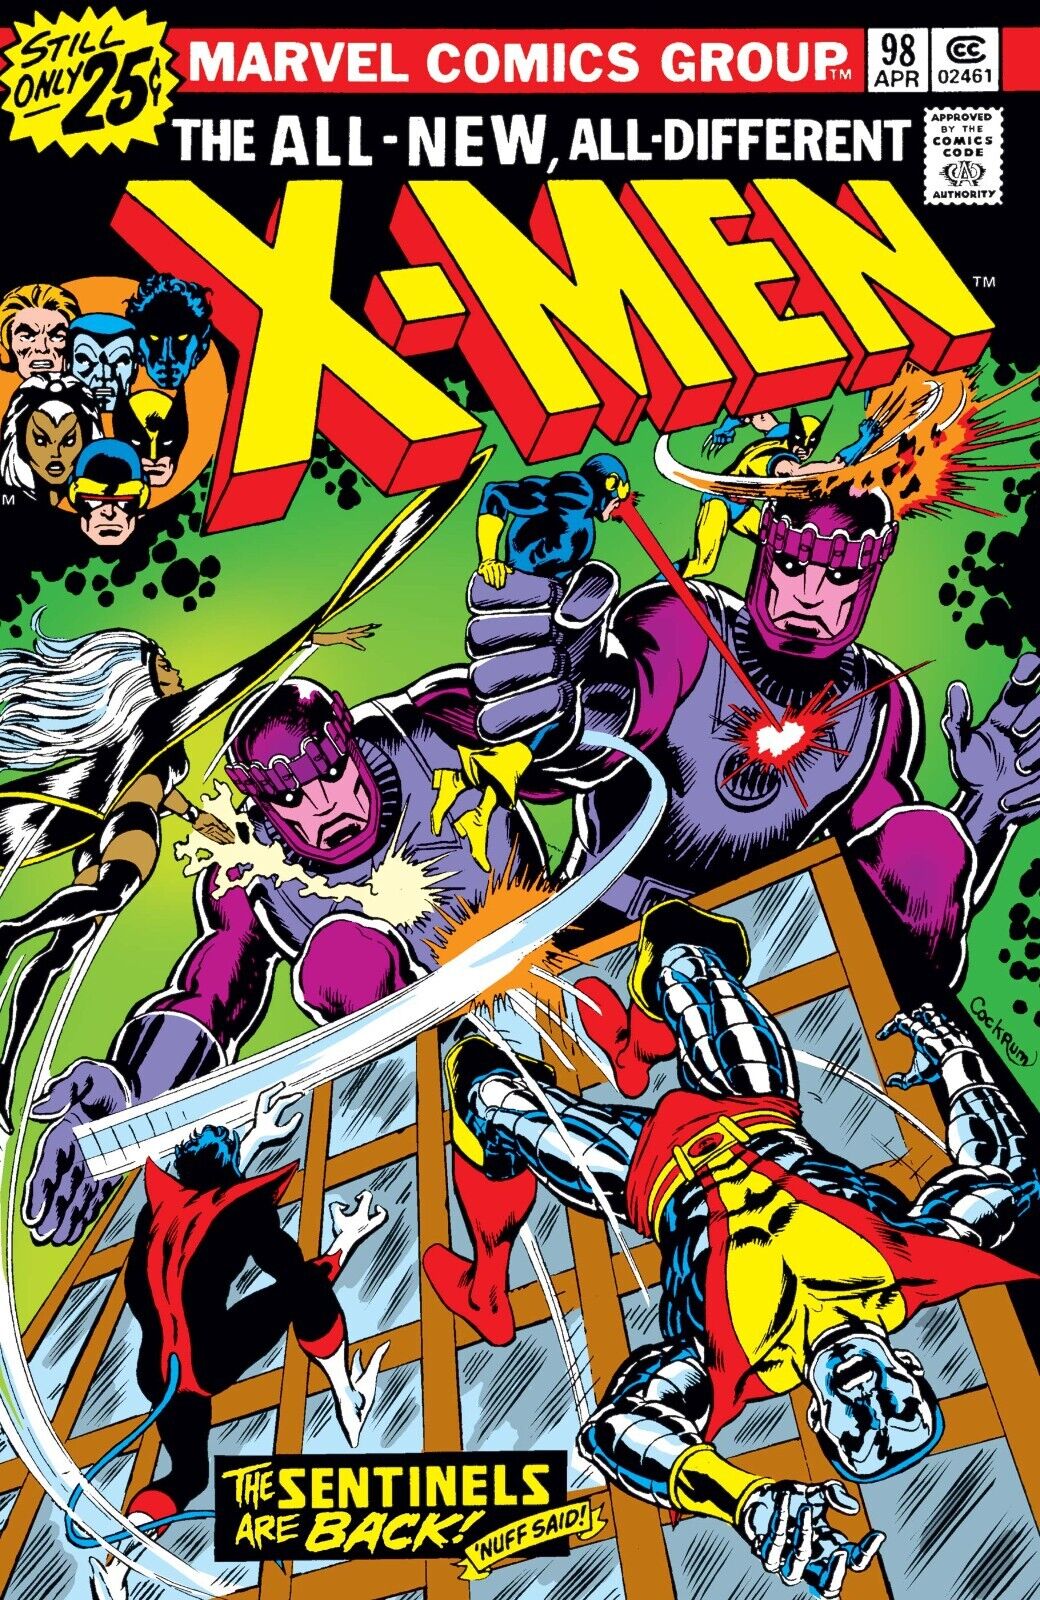 MARVEL RETRO Uncanny X-MEN POSTER 11x17 AVENGERS COMICS Thanos Iron Man Sentinel